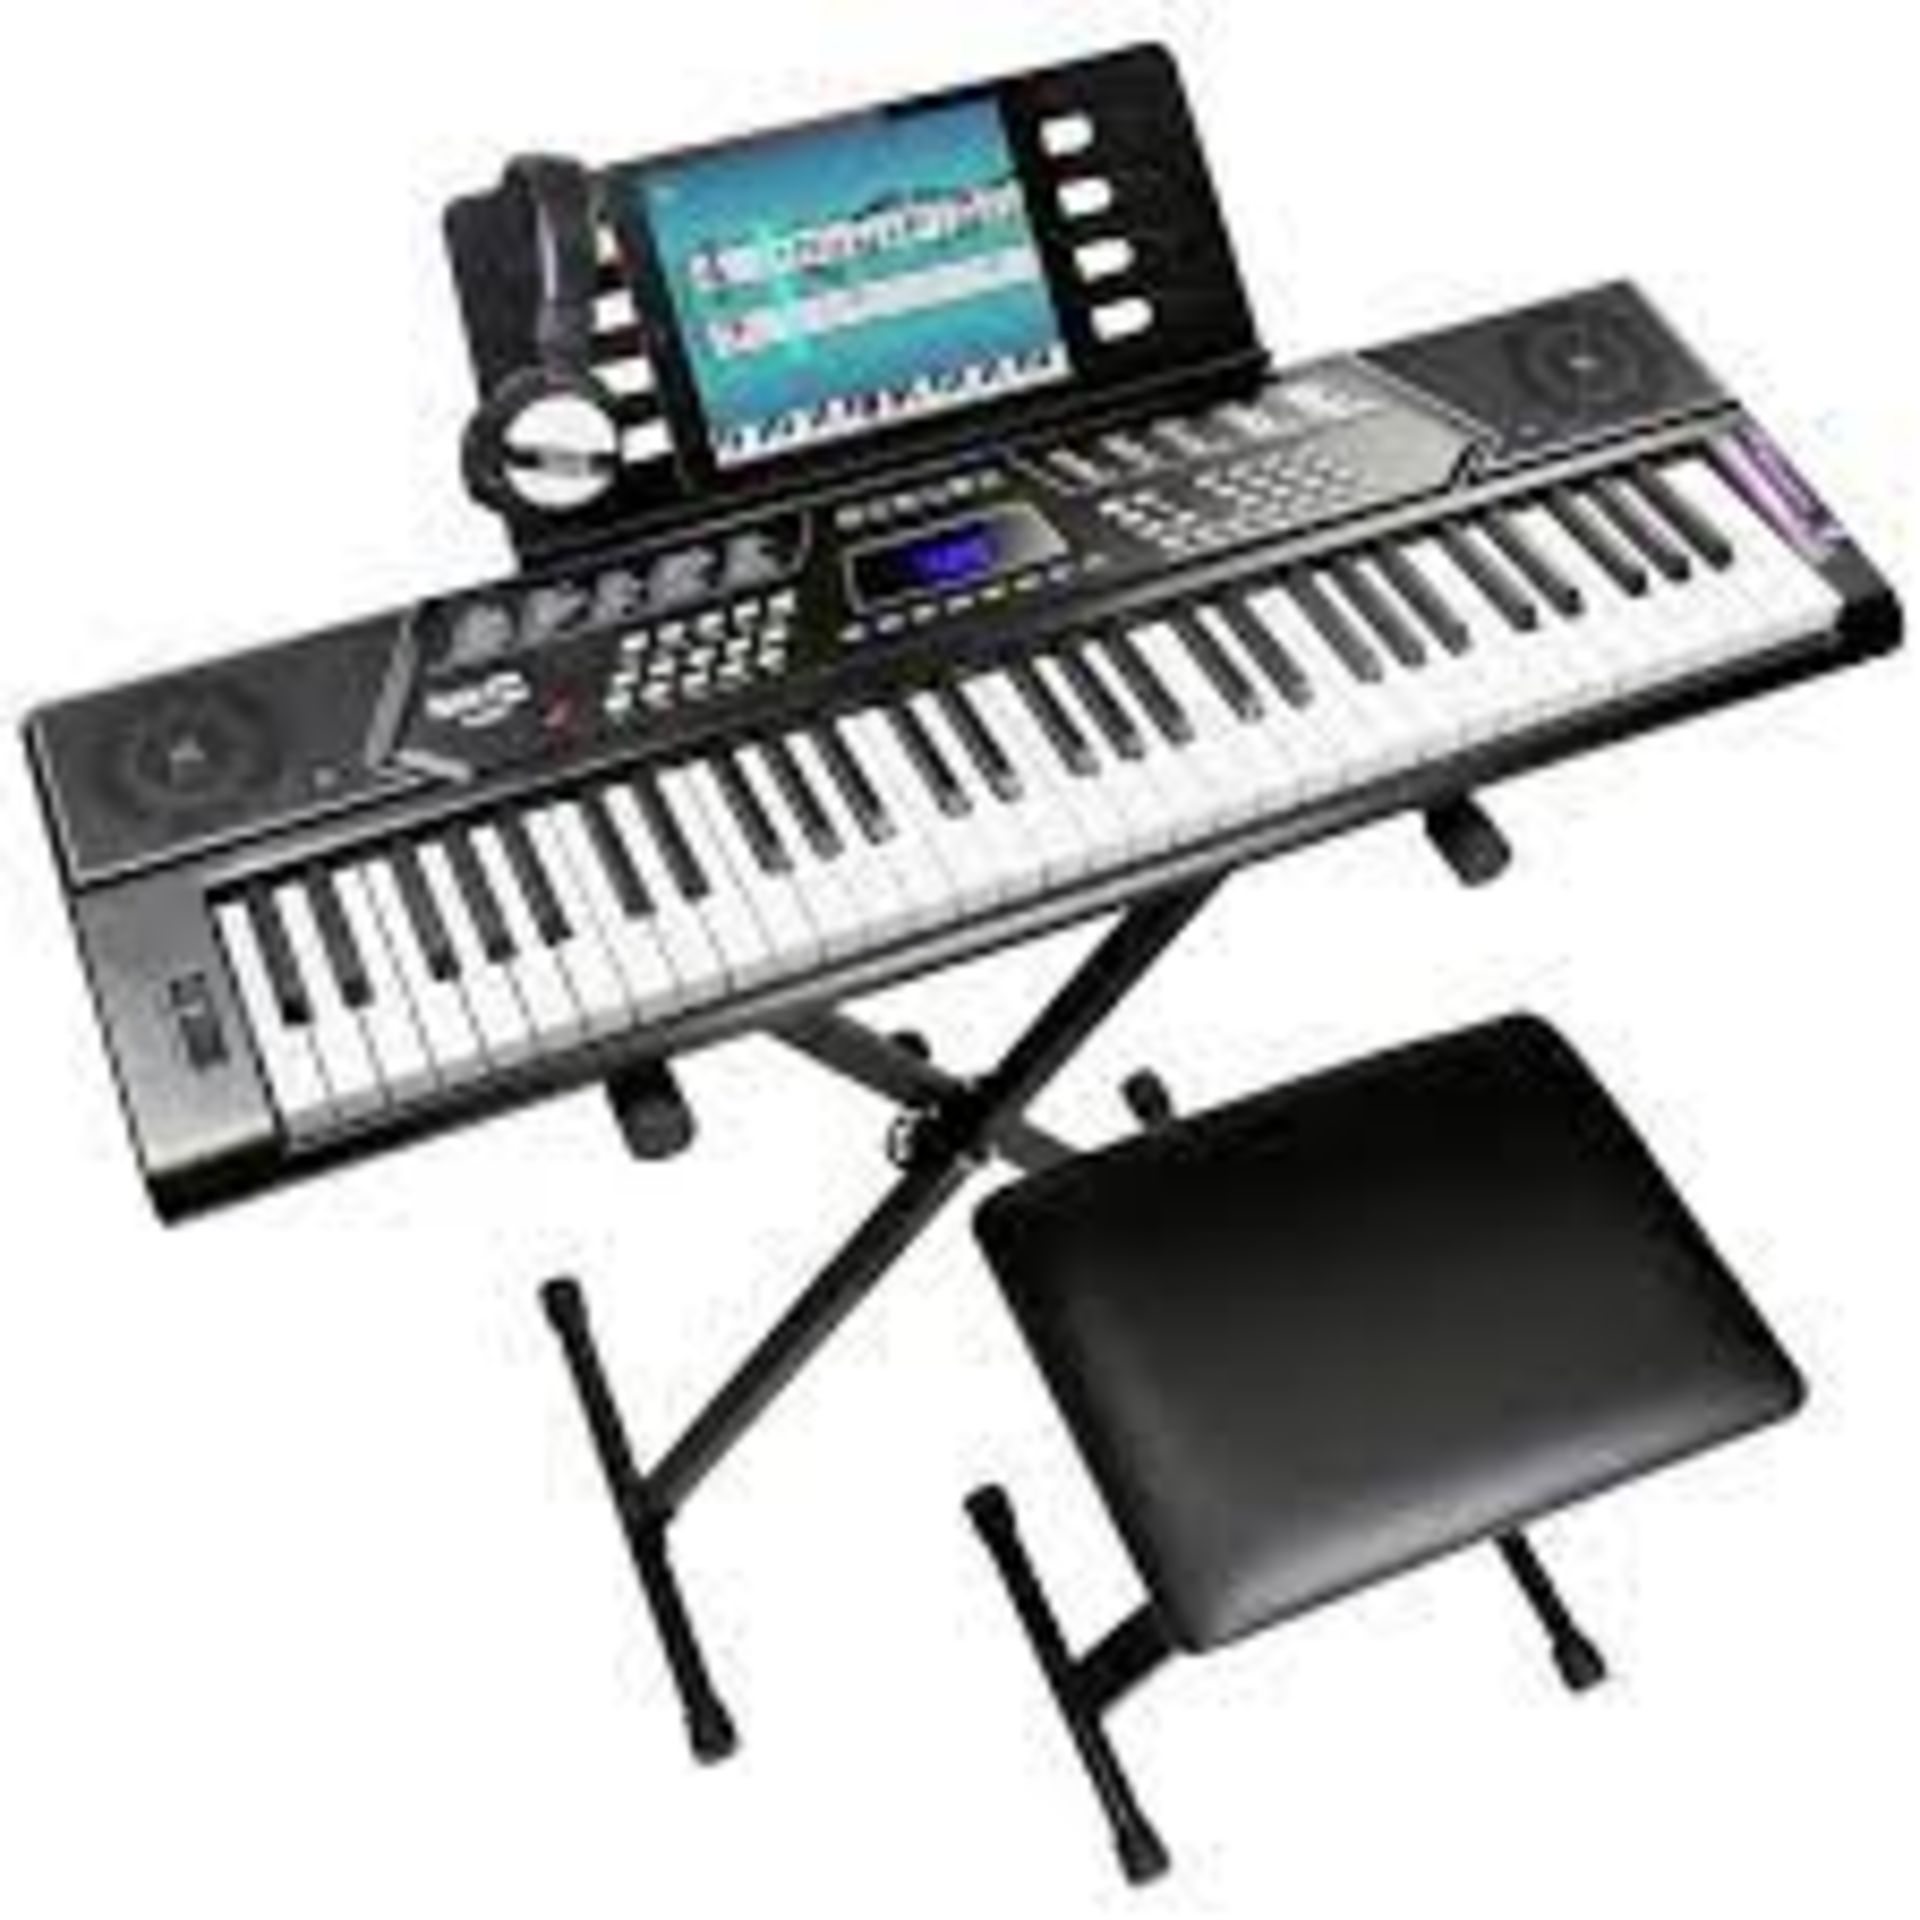 RRP £130 Boxed Rockjam Rj5061 Keyboard Super Kit